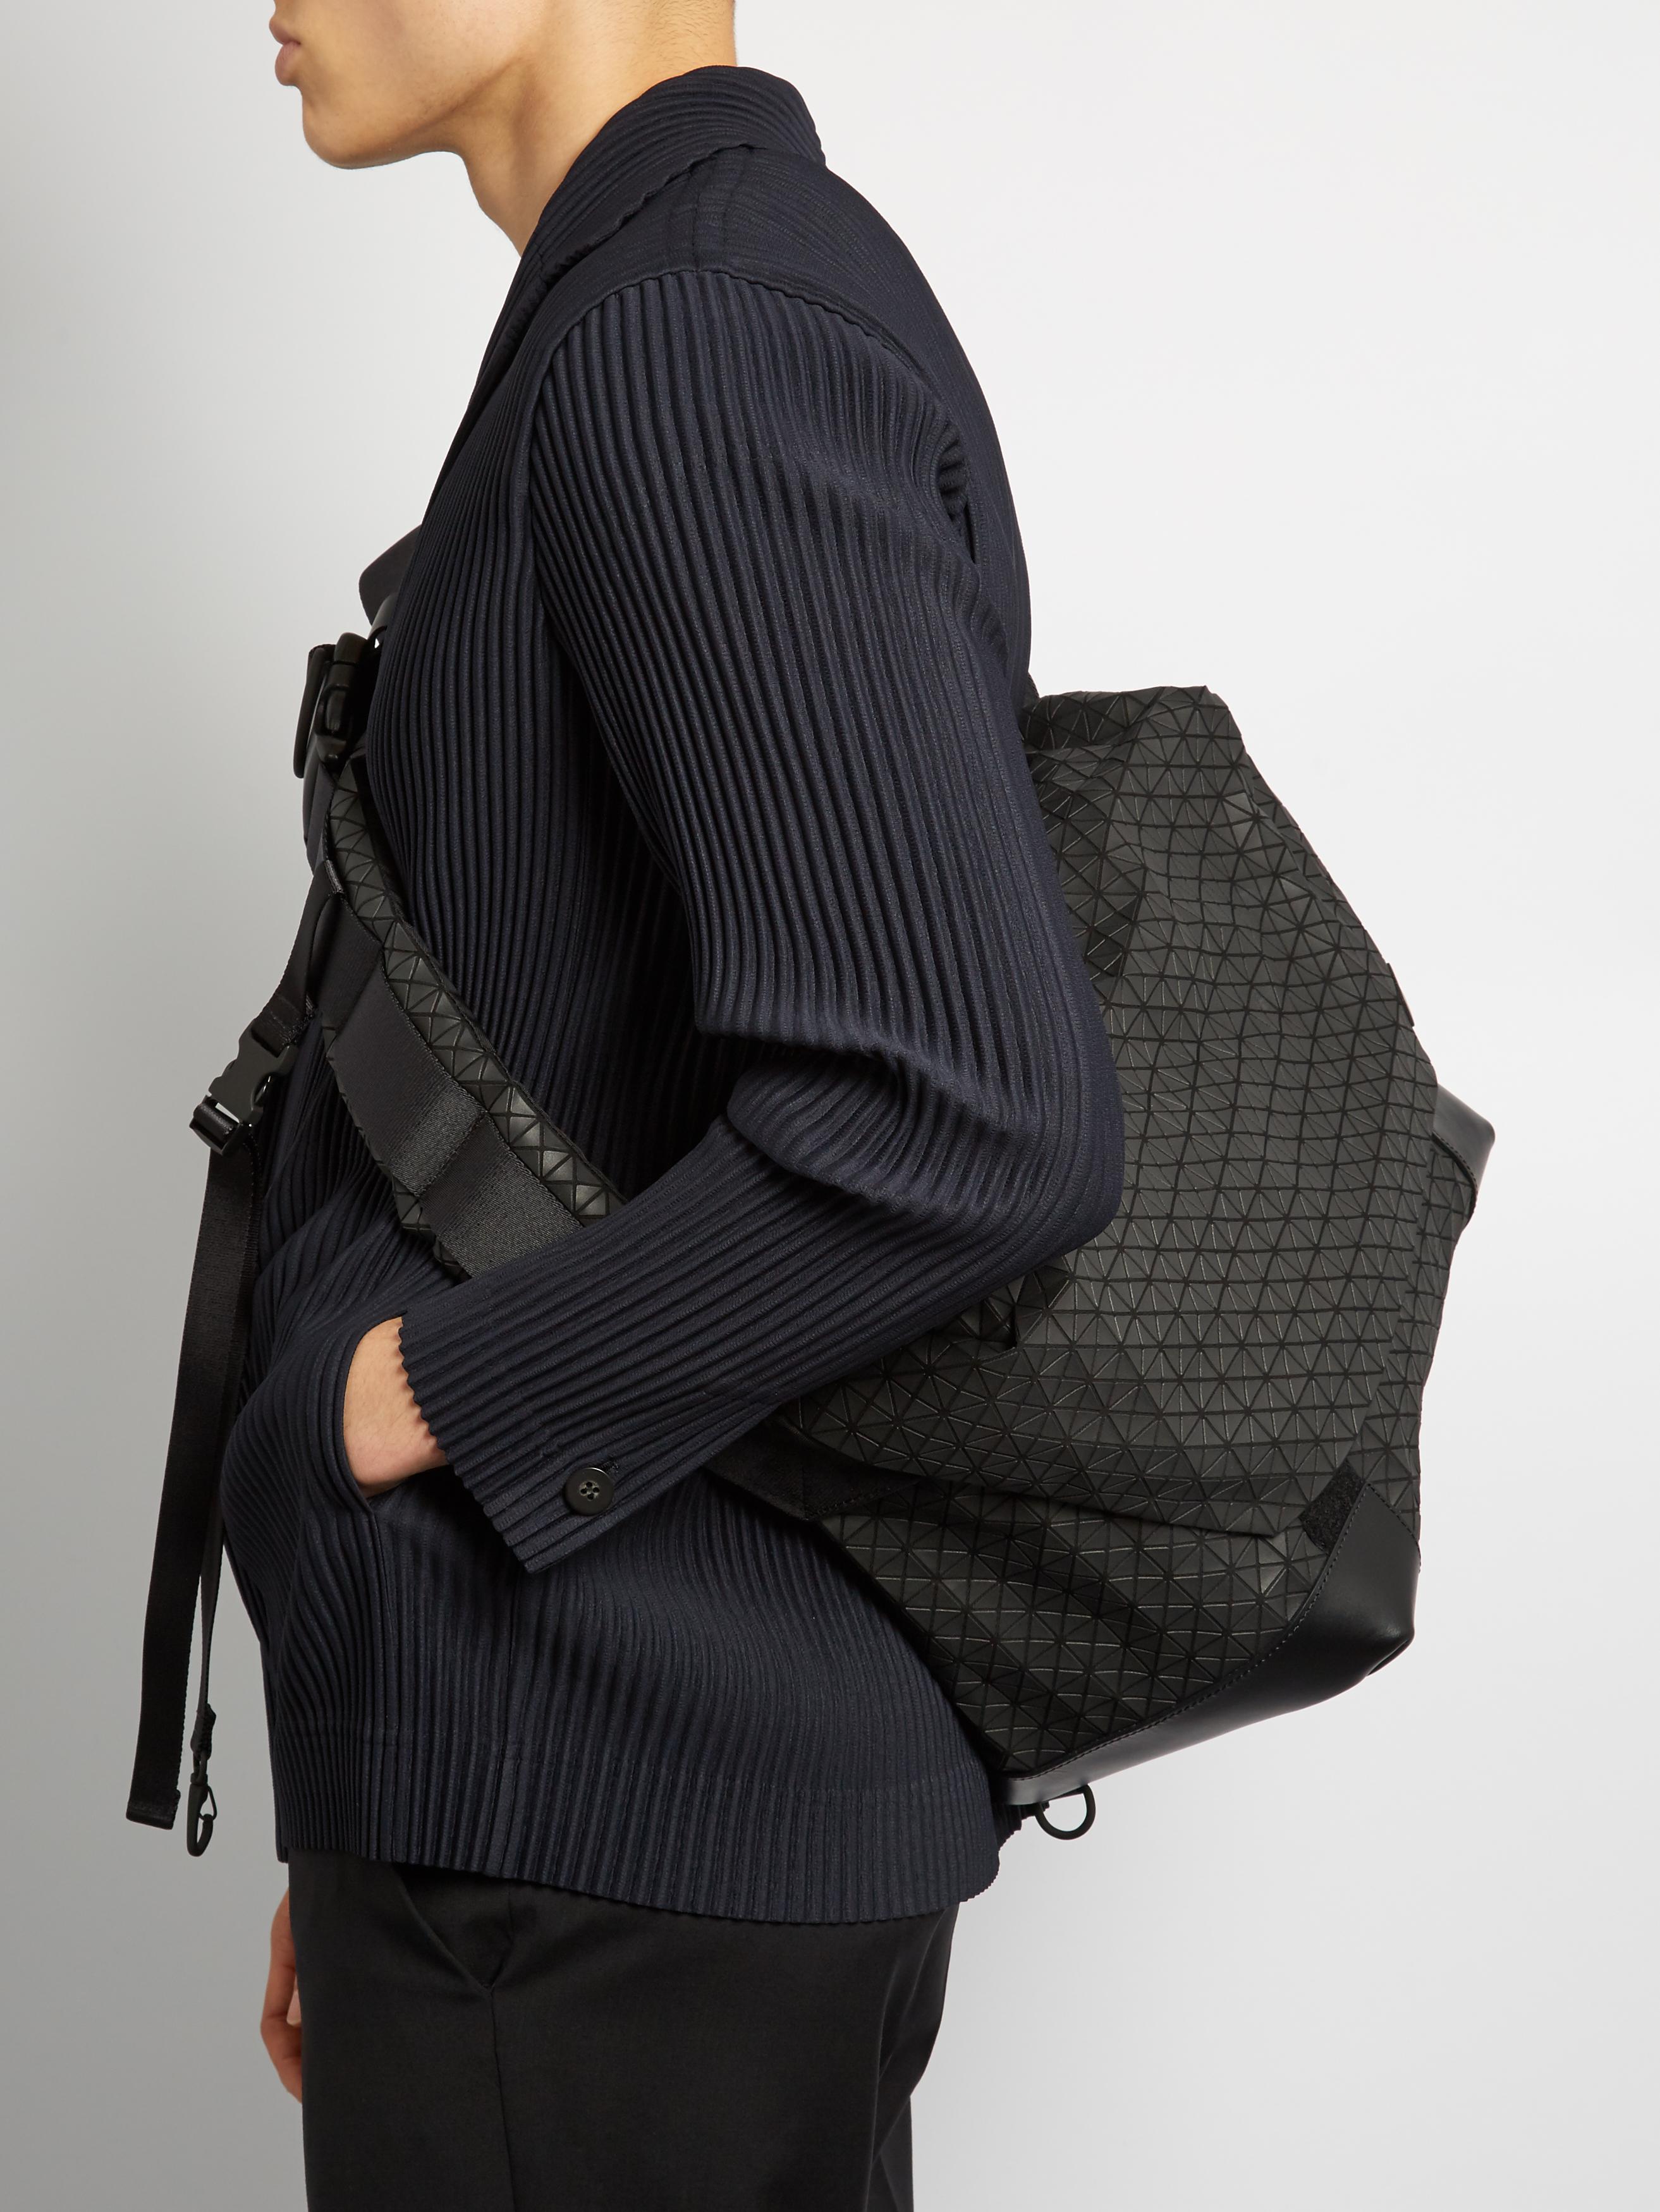 Lyst - Bao Bao Issey Miyake Triangular Panels Messenger Bag in Black